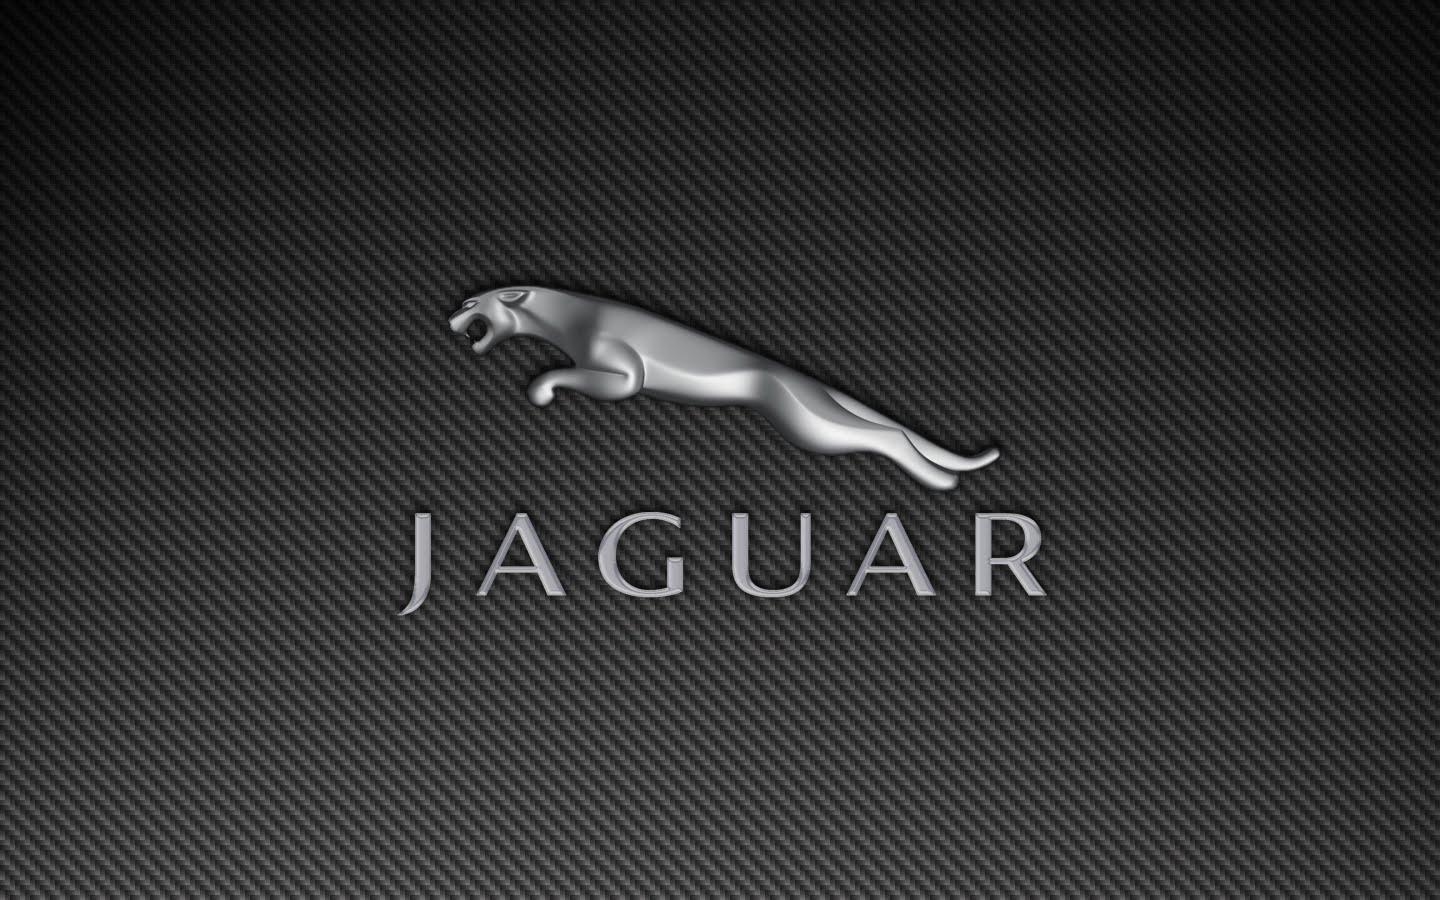 2018 Jaguar XJ Wallpaper Iphone